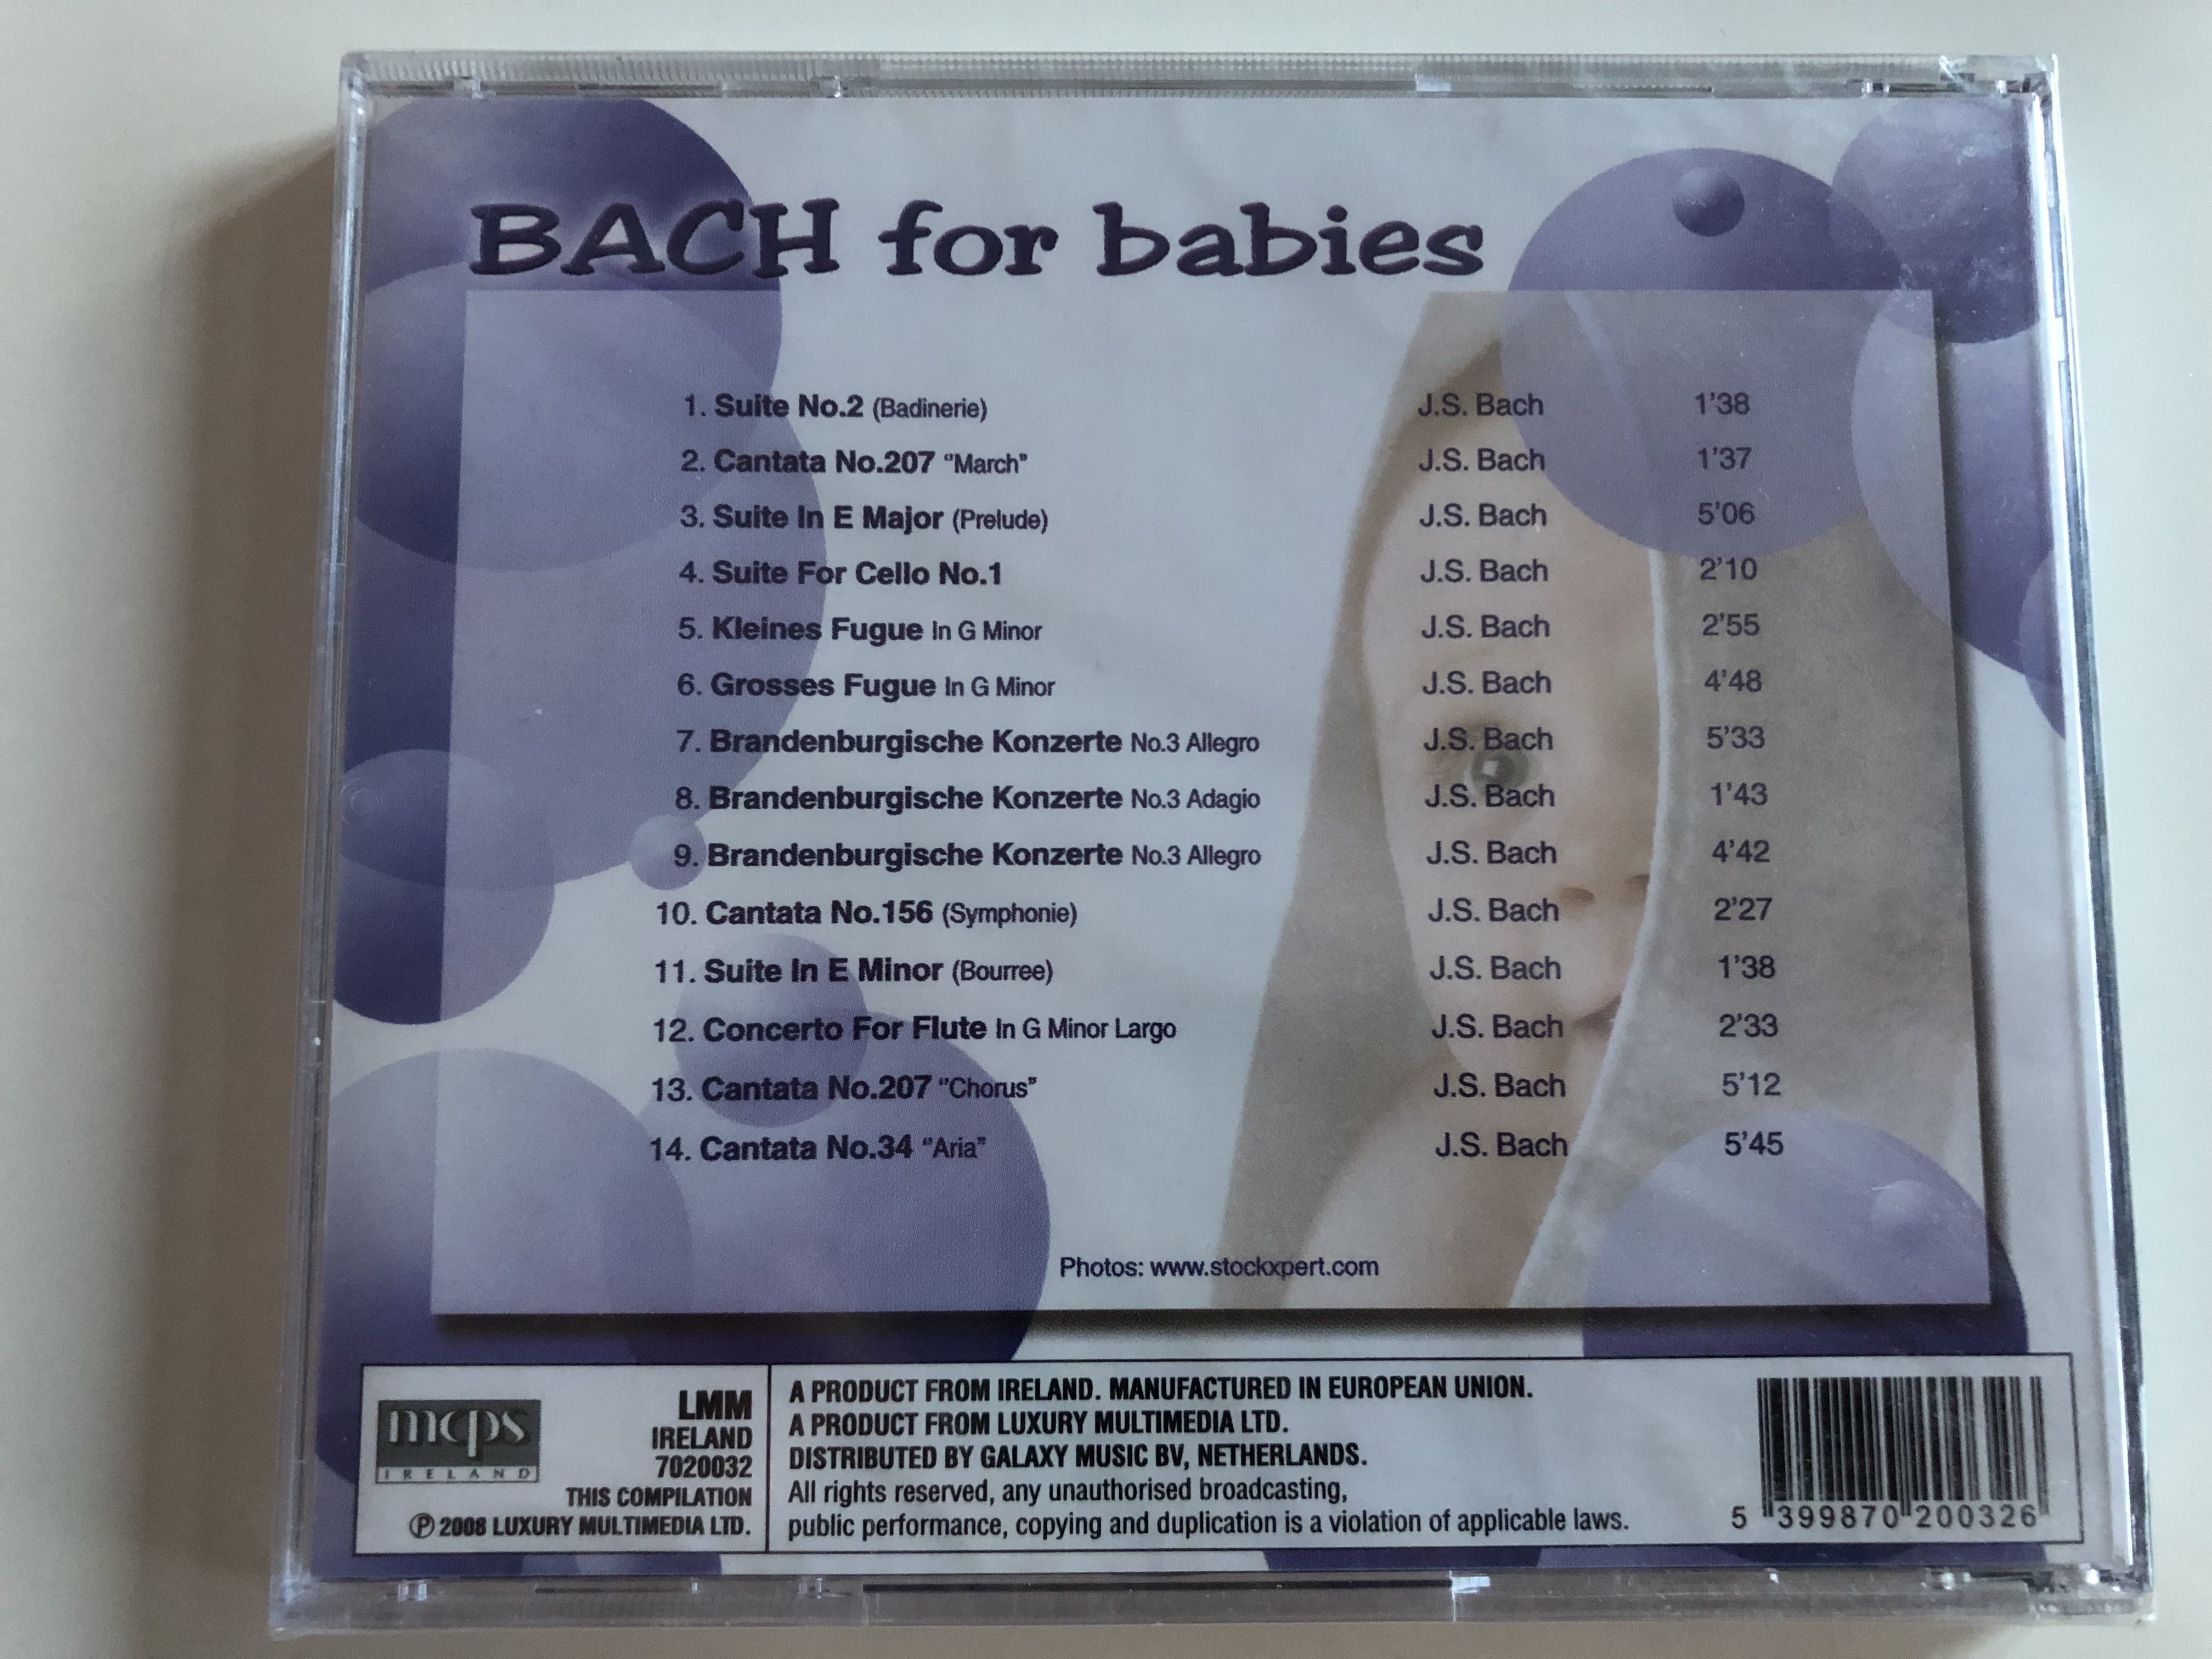 bach-for-babies-relaxing-stimulating-nurturing-beautiful-babies-audio-cd-2008-lmm-7020032-2-.jpg